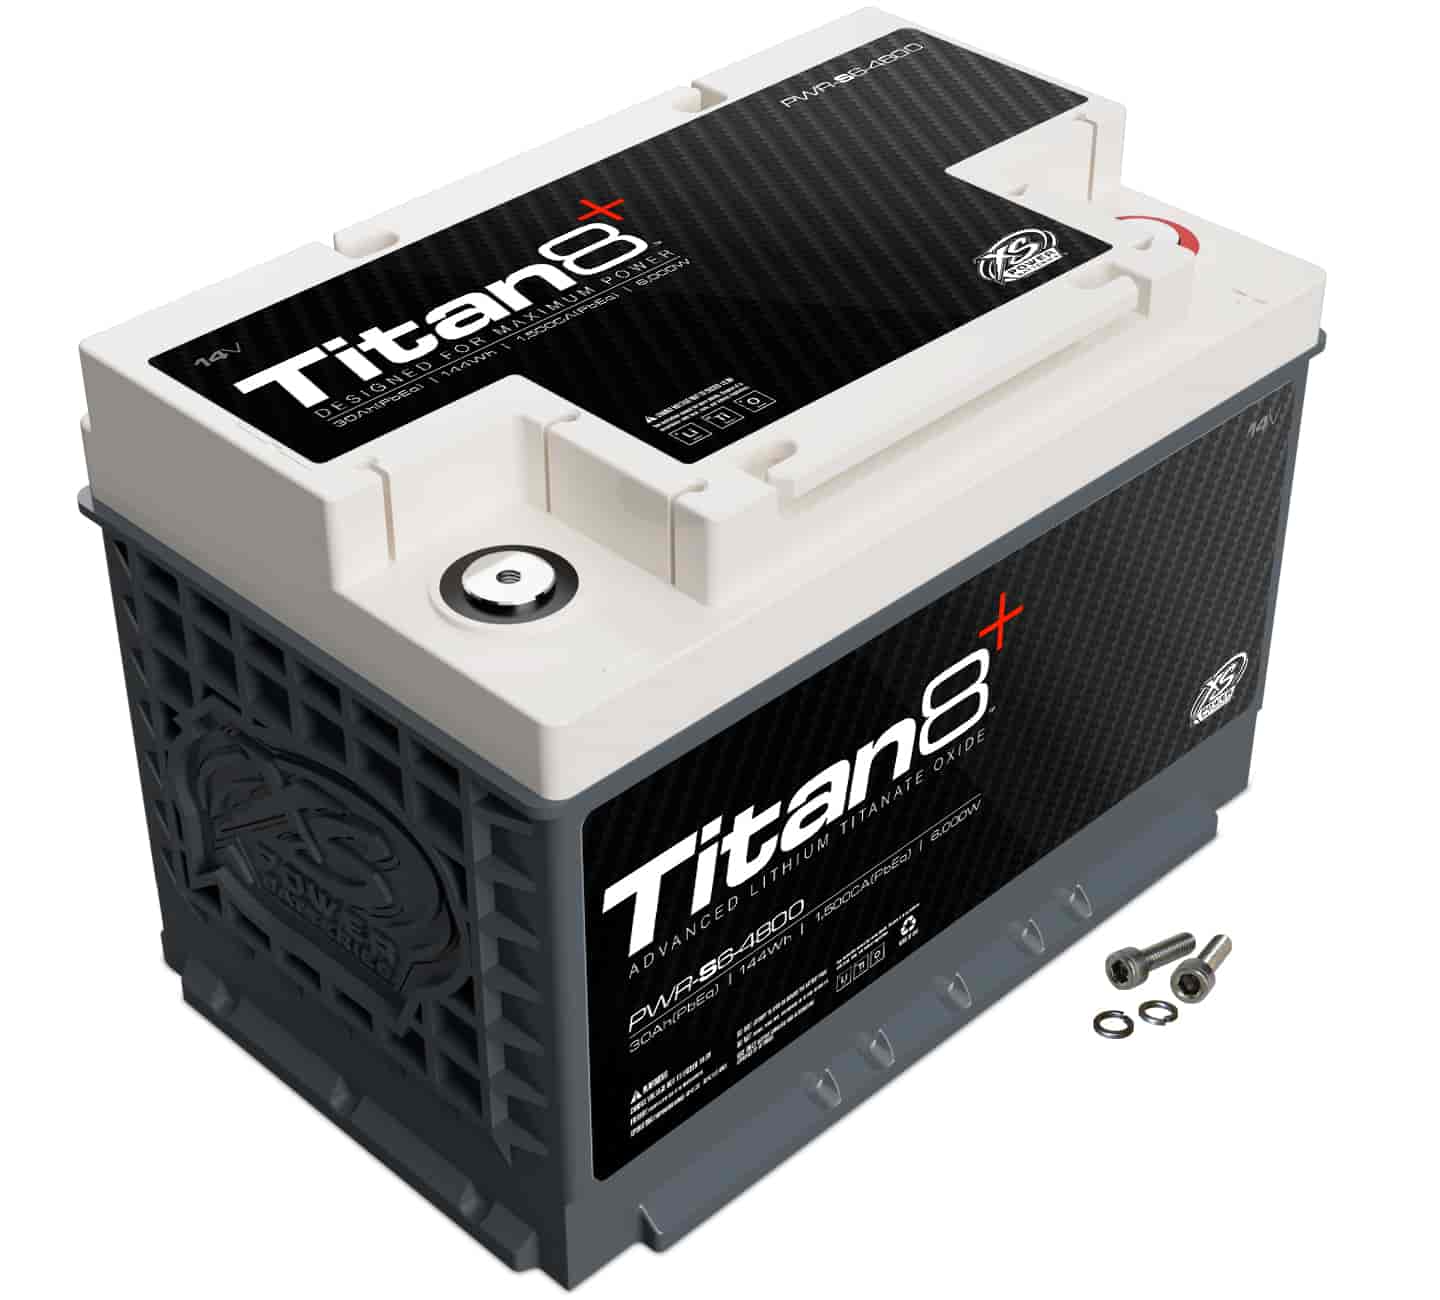 14V Titan8 Lithium Battery